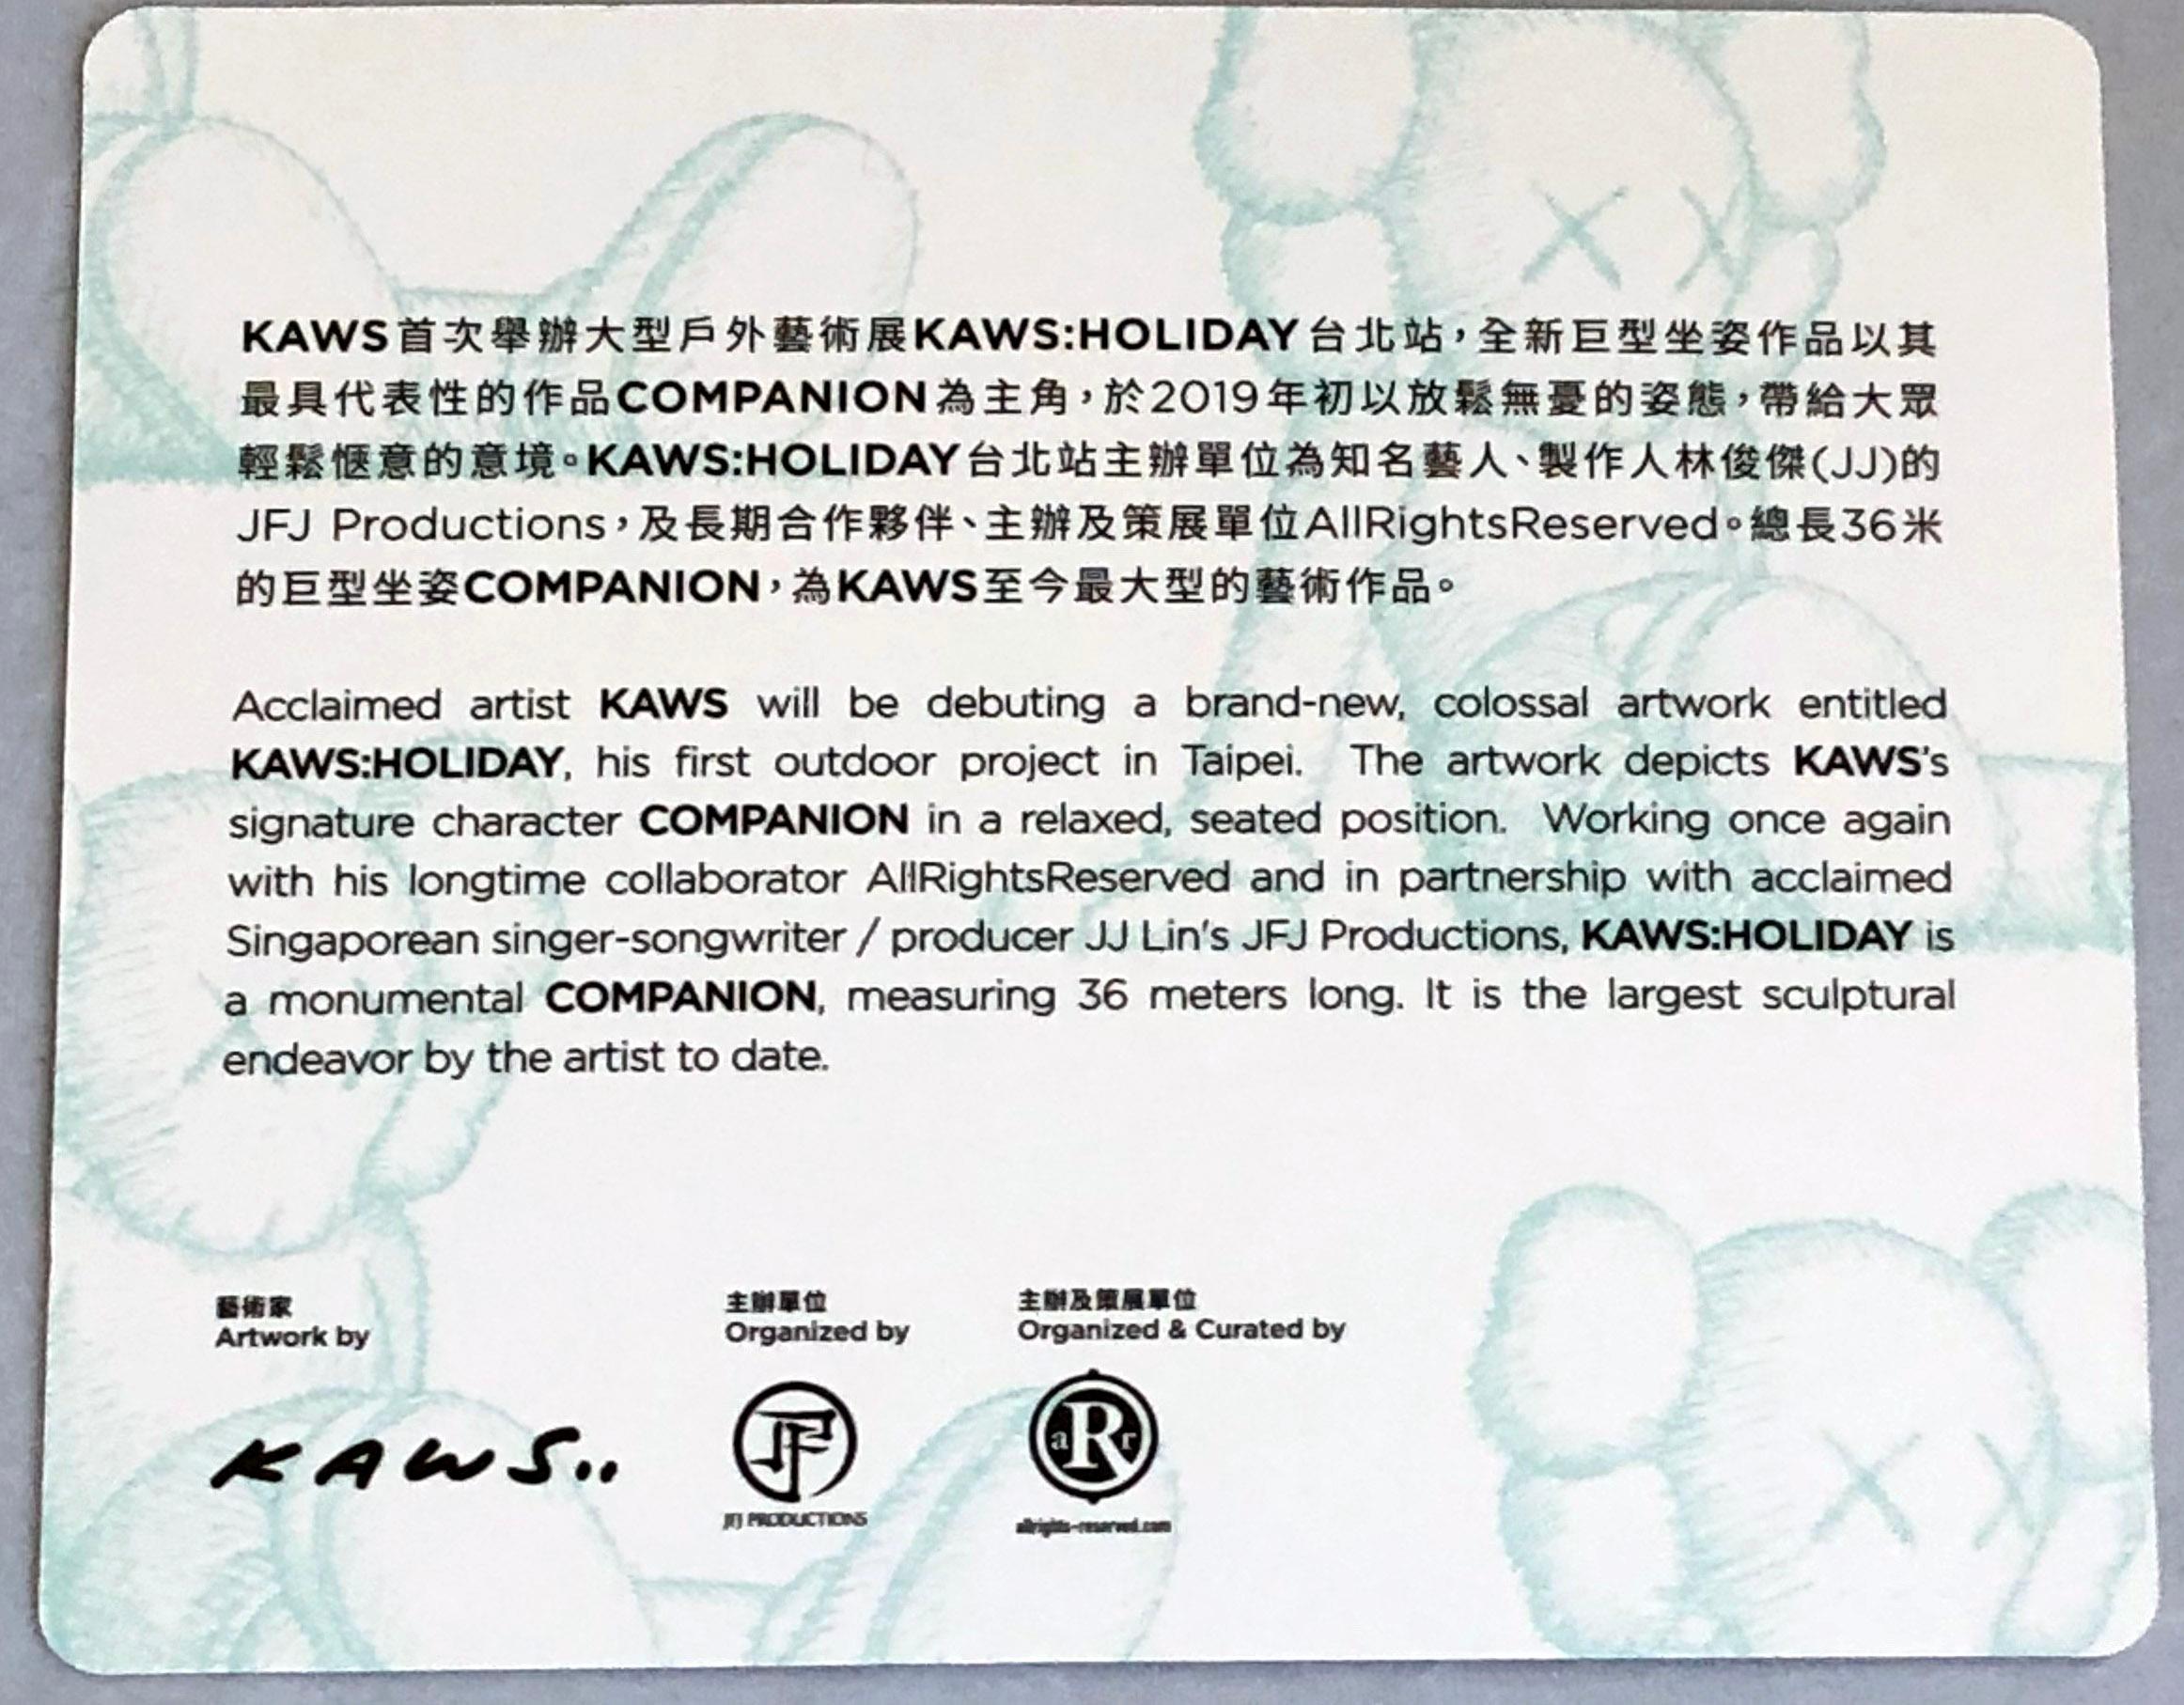 KAWS Holiday Companion Taipei (KAWS Schwarze Companion) 4